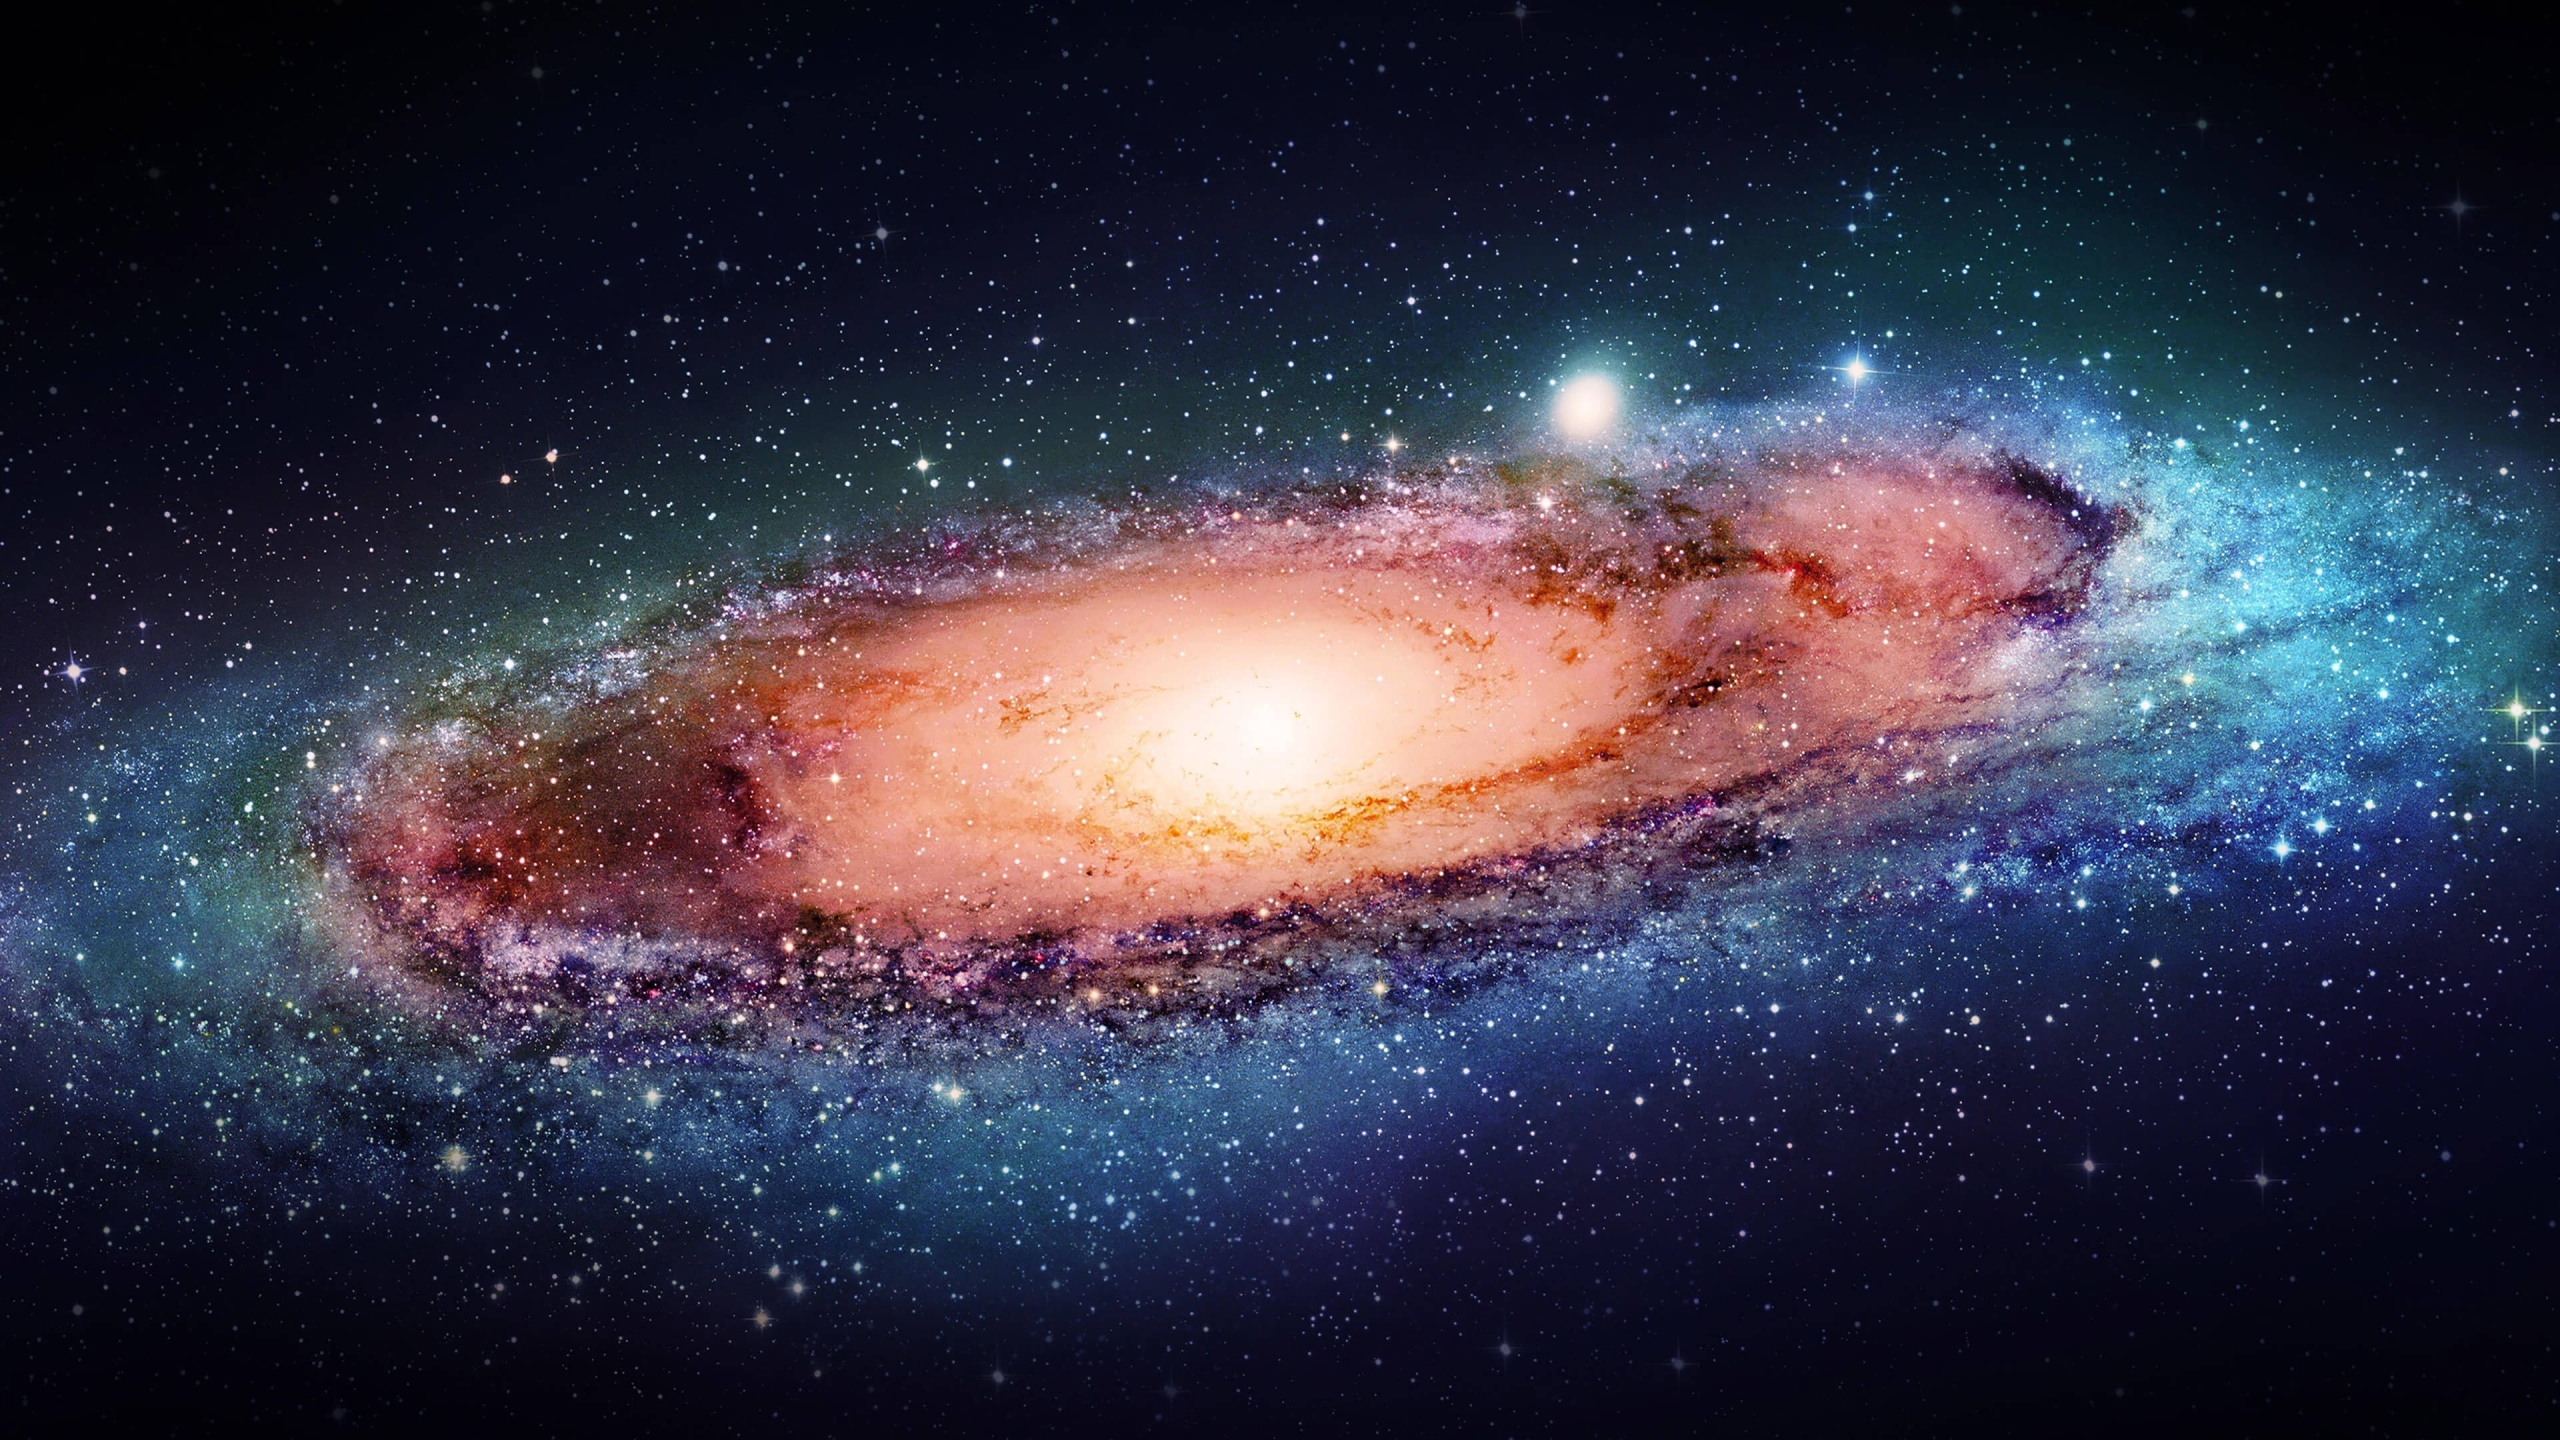 Milky Way Galaxy for 2560 x 1440 HDTV resolution